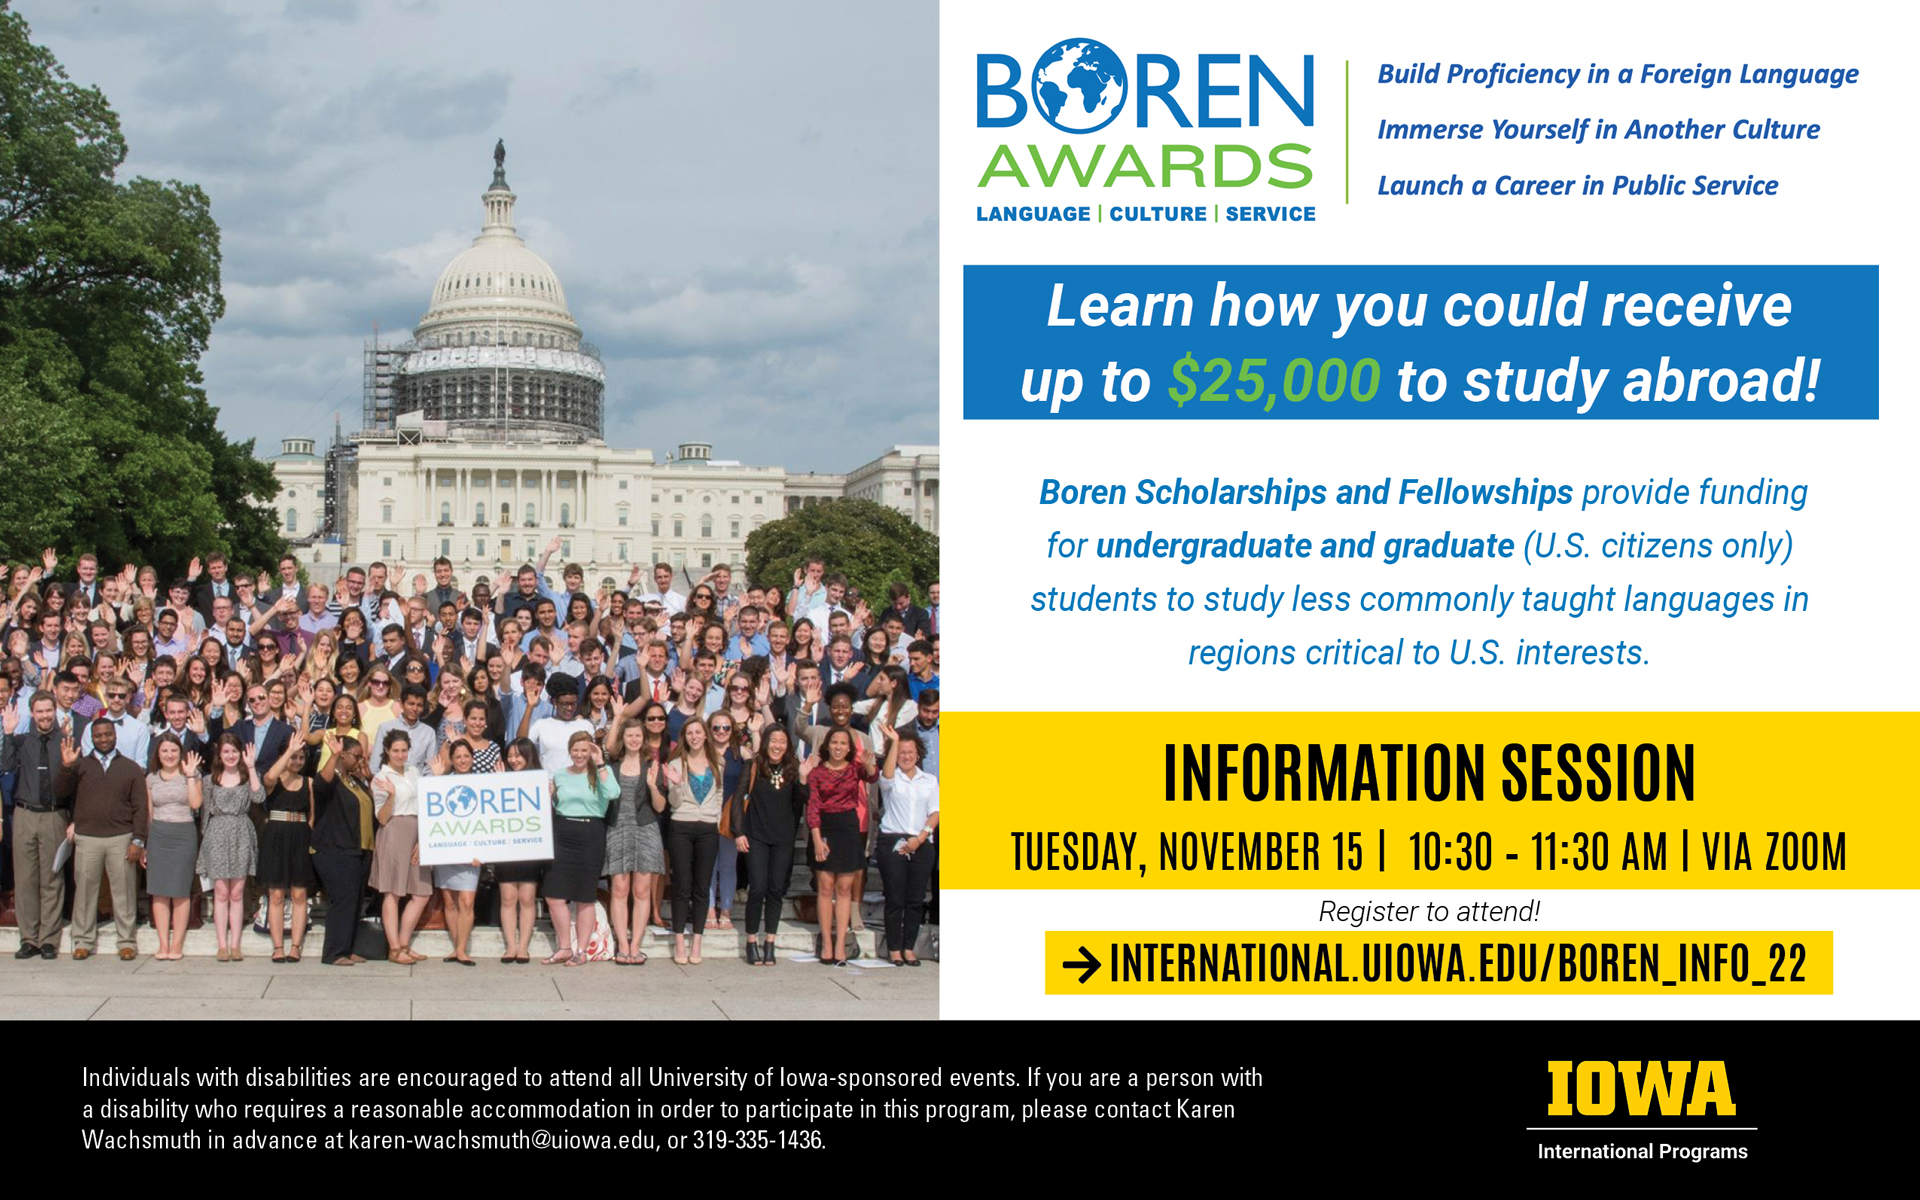 Boren Scholarship and Fellowship Information Session, Tuesday November 15 10:30-11:30am